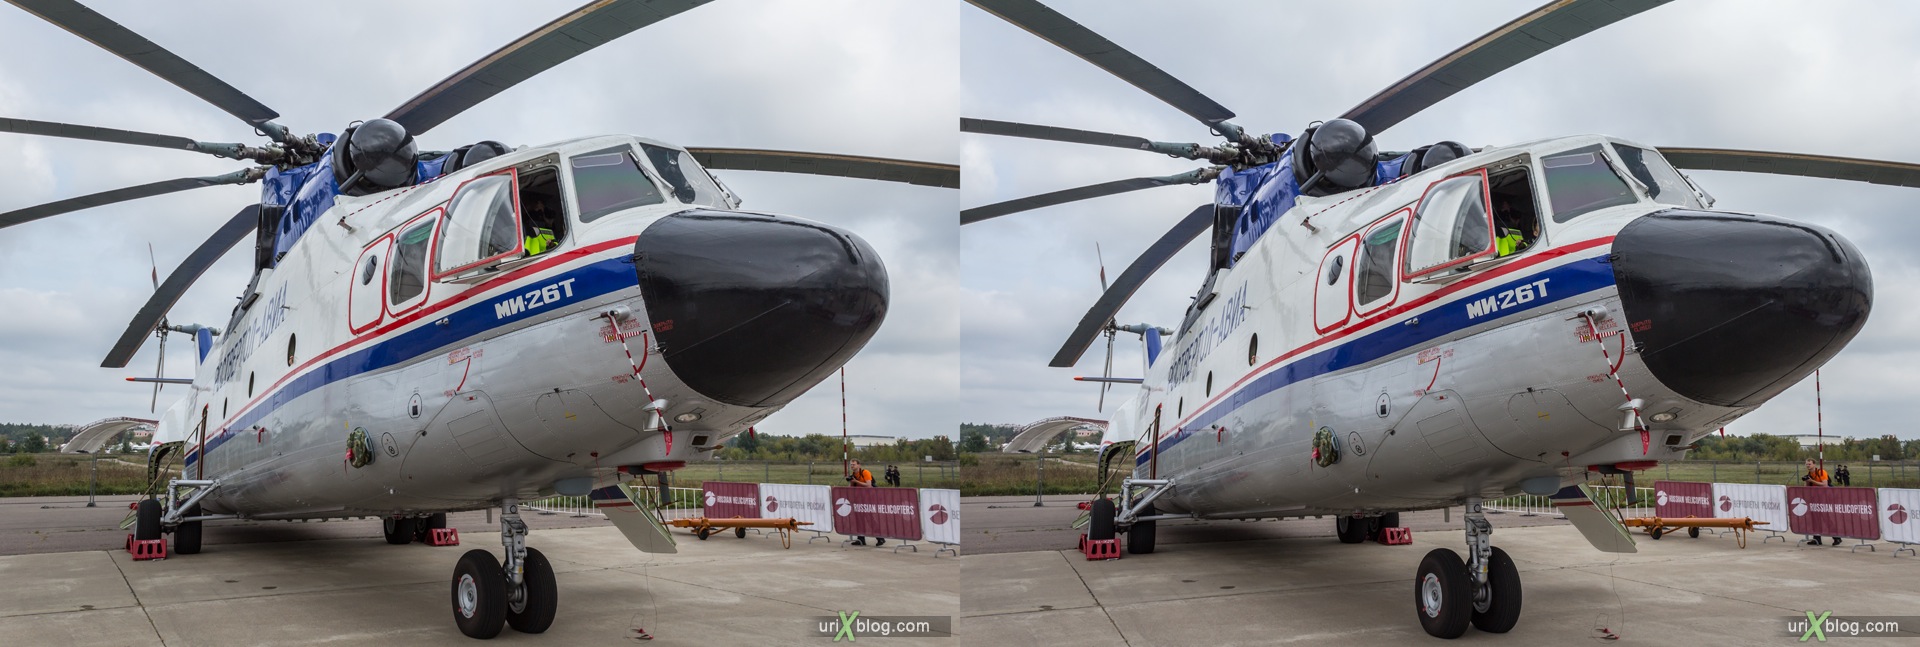 2013, MAKS, International Aviation and Space Salon, Russia, Ramenskoye airfield, Mi-26T, helicopter, 3D, stereo pair, cross-eyed, crossview, cross view stereo pair, stereoscopic